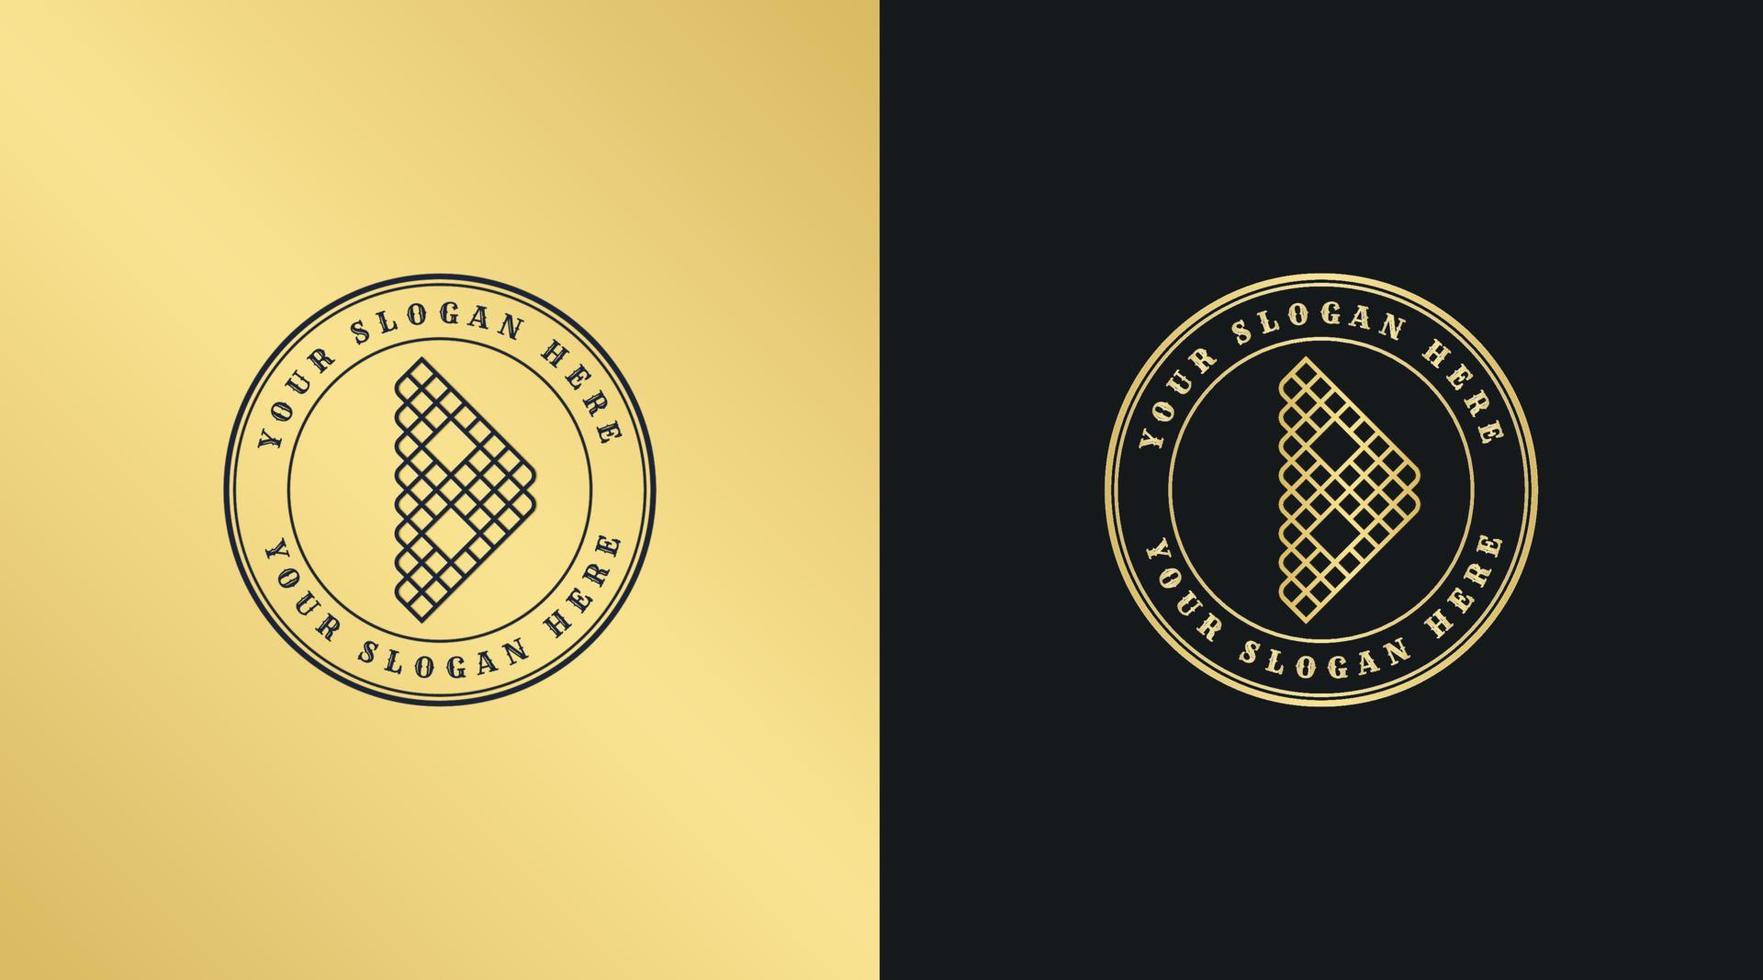 B lettera logo, pendenza logo, lusso logo, moderno logo vettore